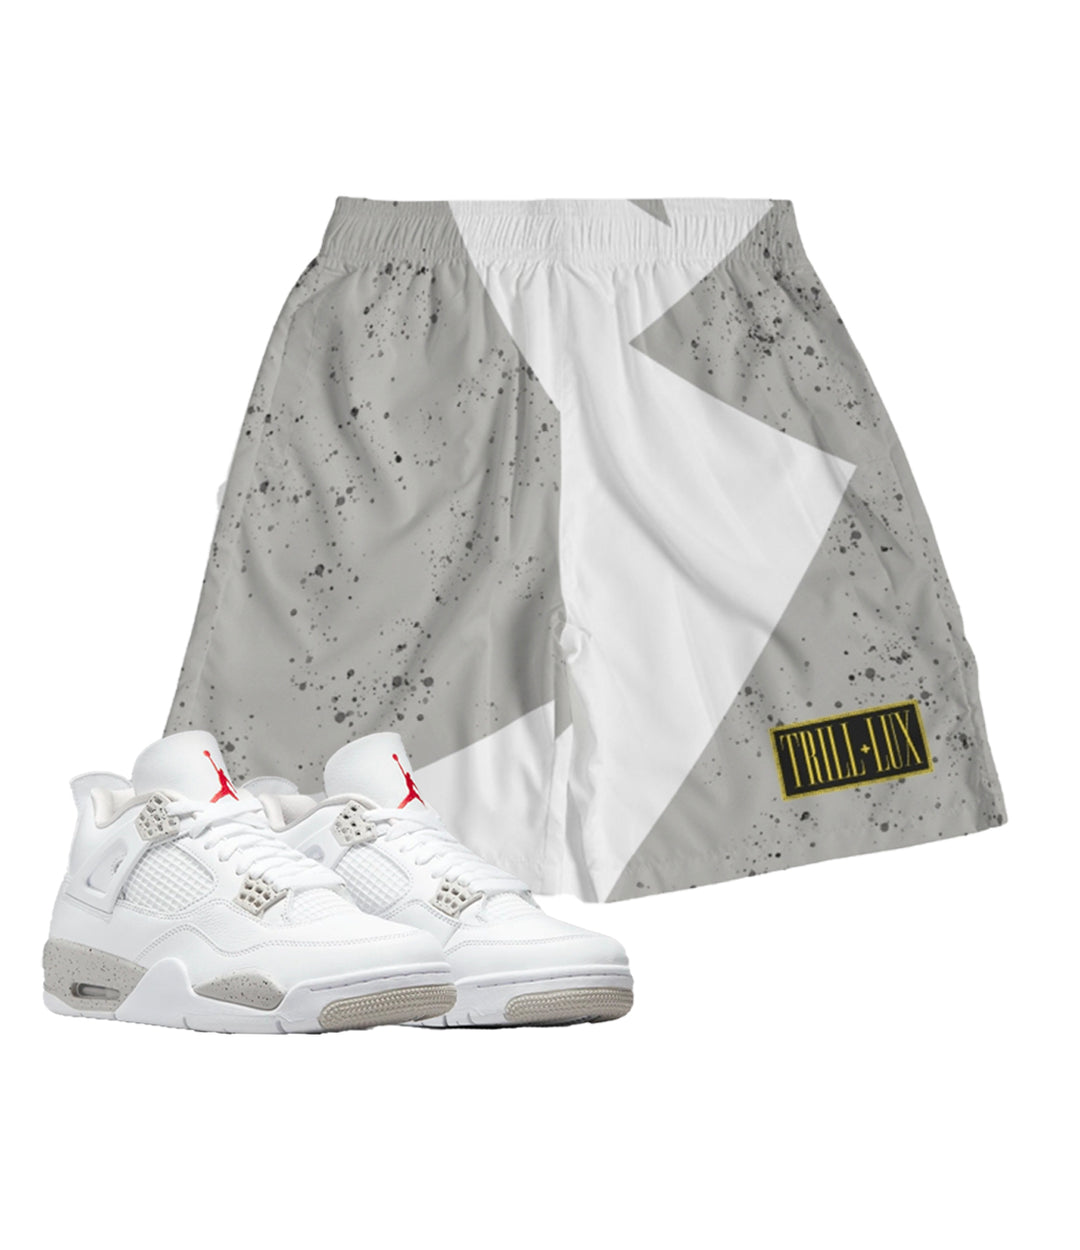 Trill | Air Jordan 4 Tech White Oreo Inspired fragment Tank Top & Shorts